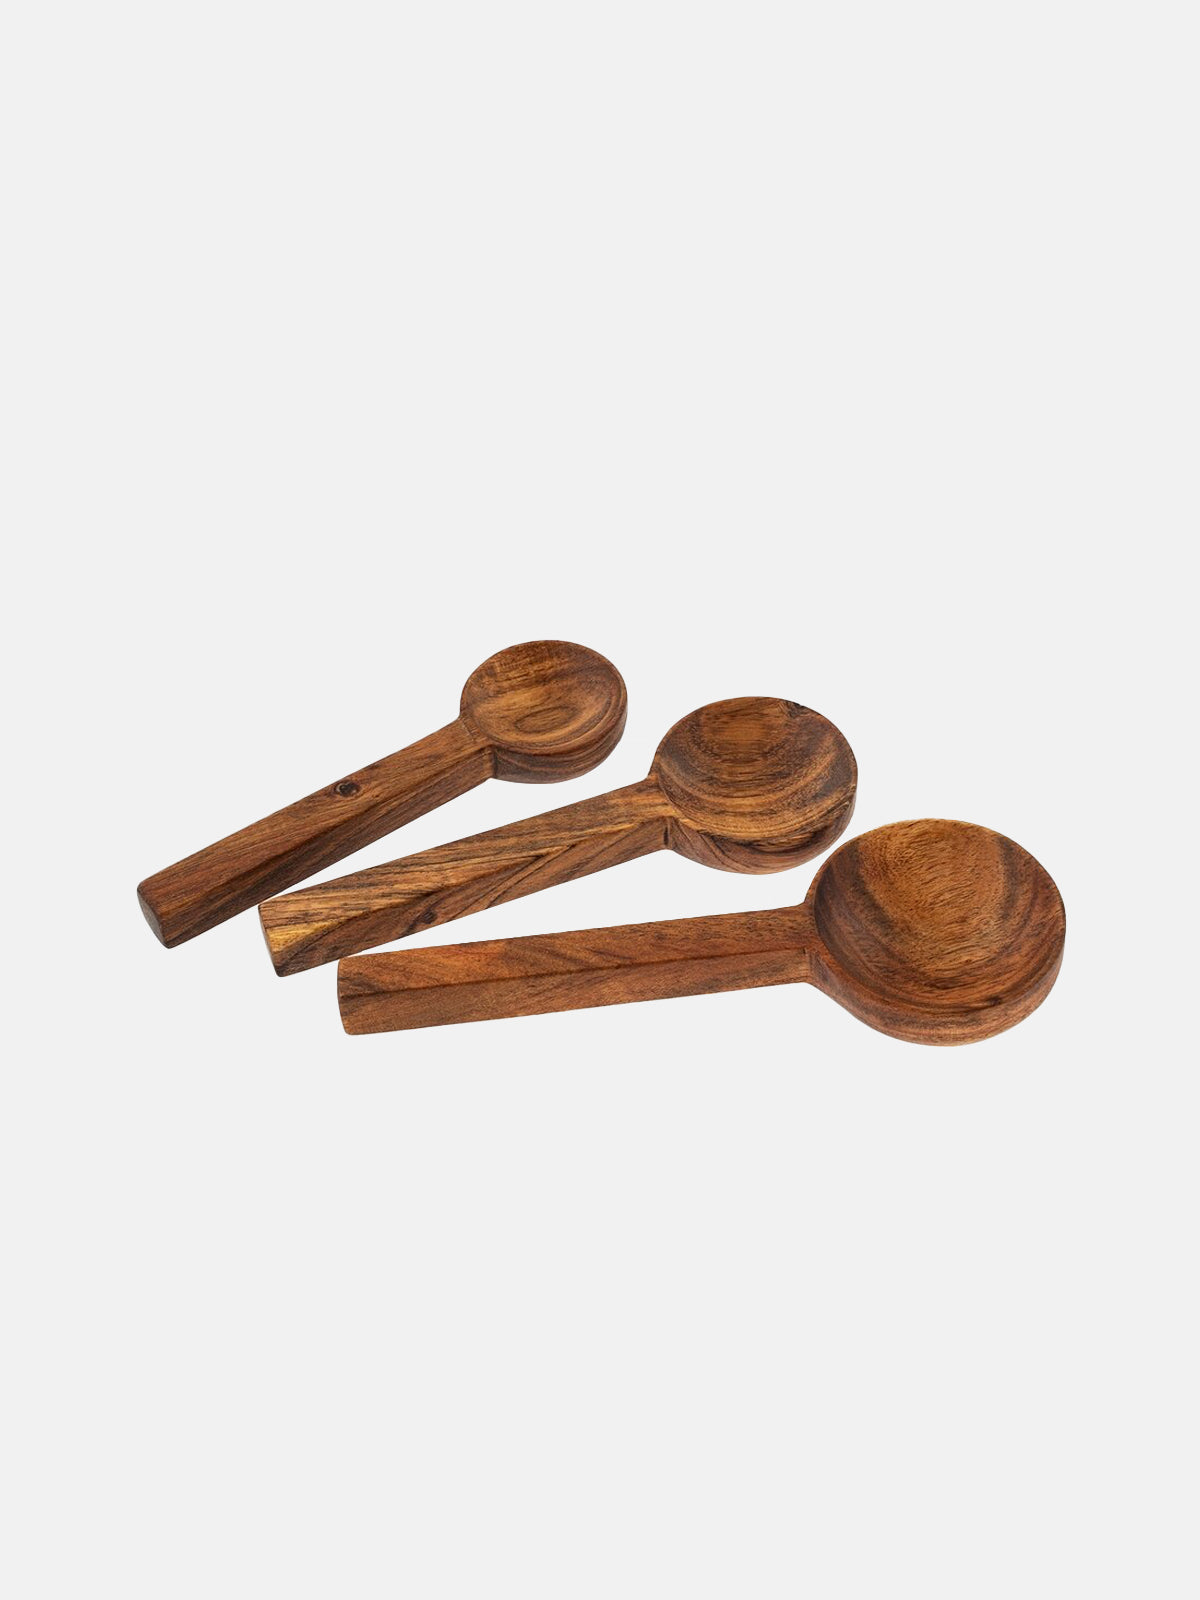 Acacia Wooden Spoon Set